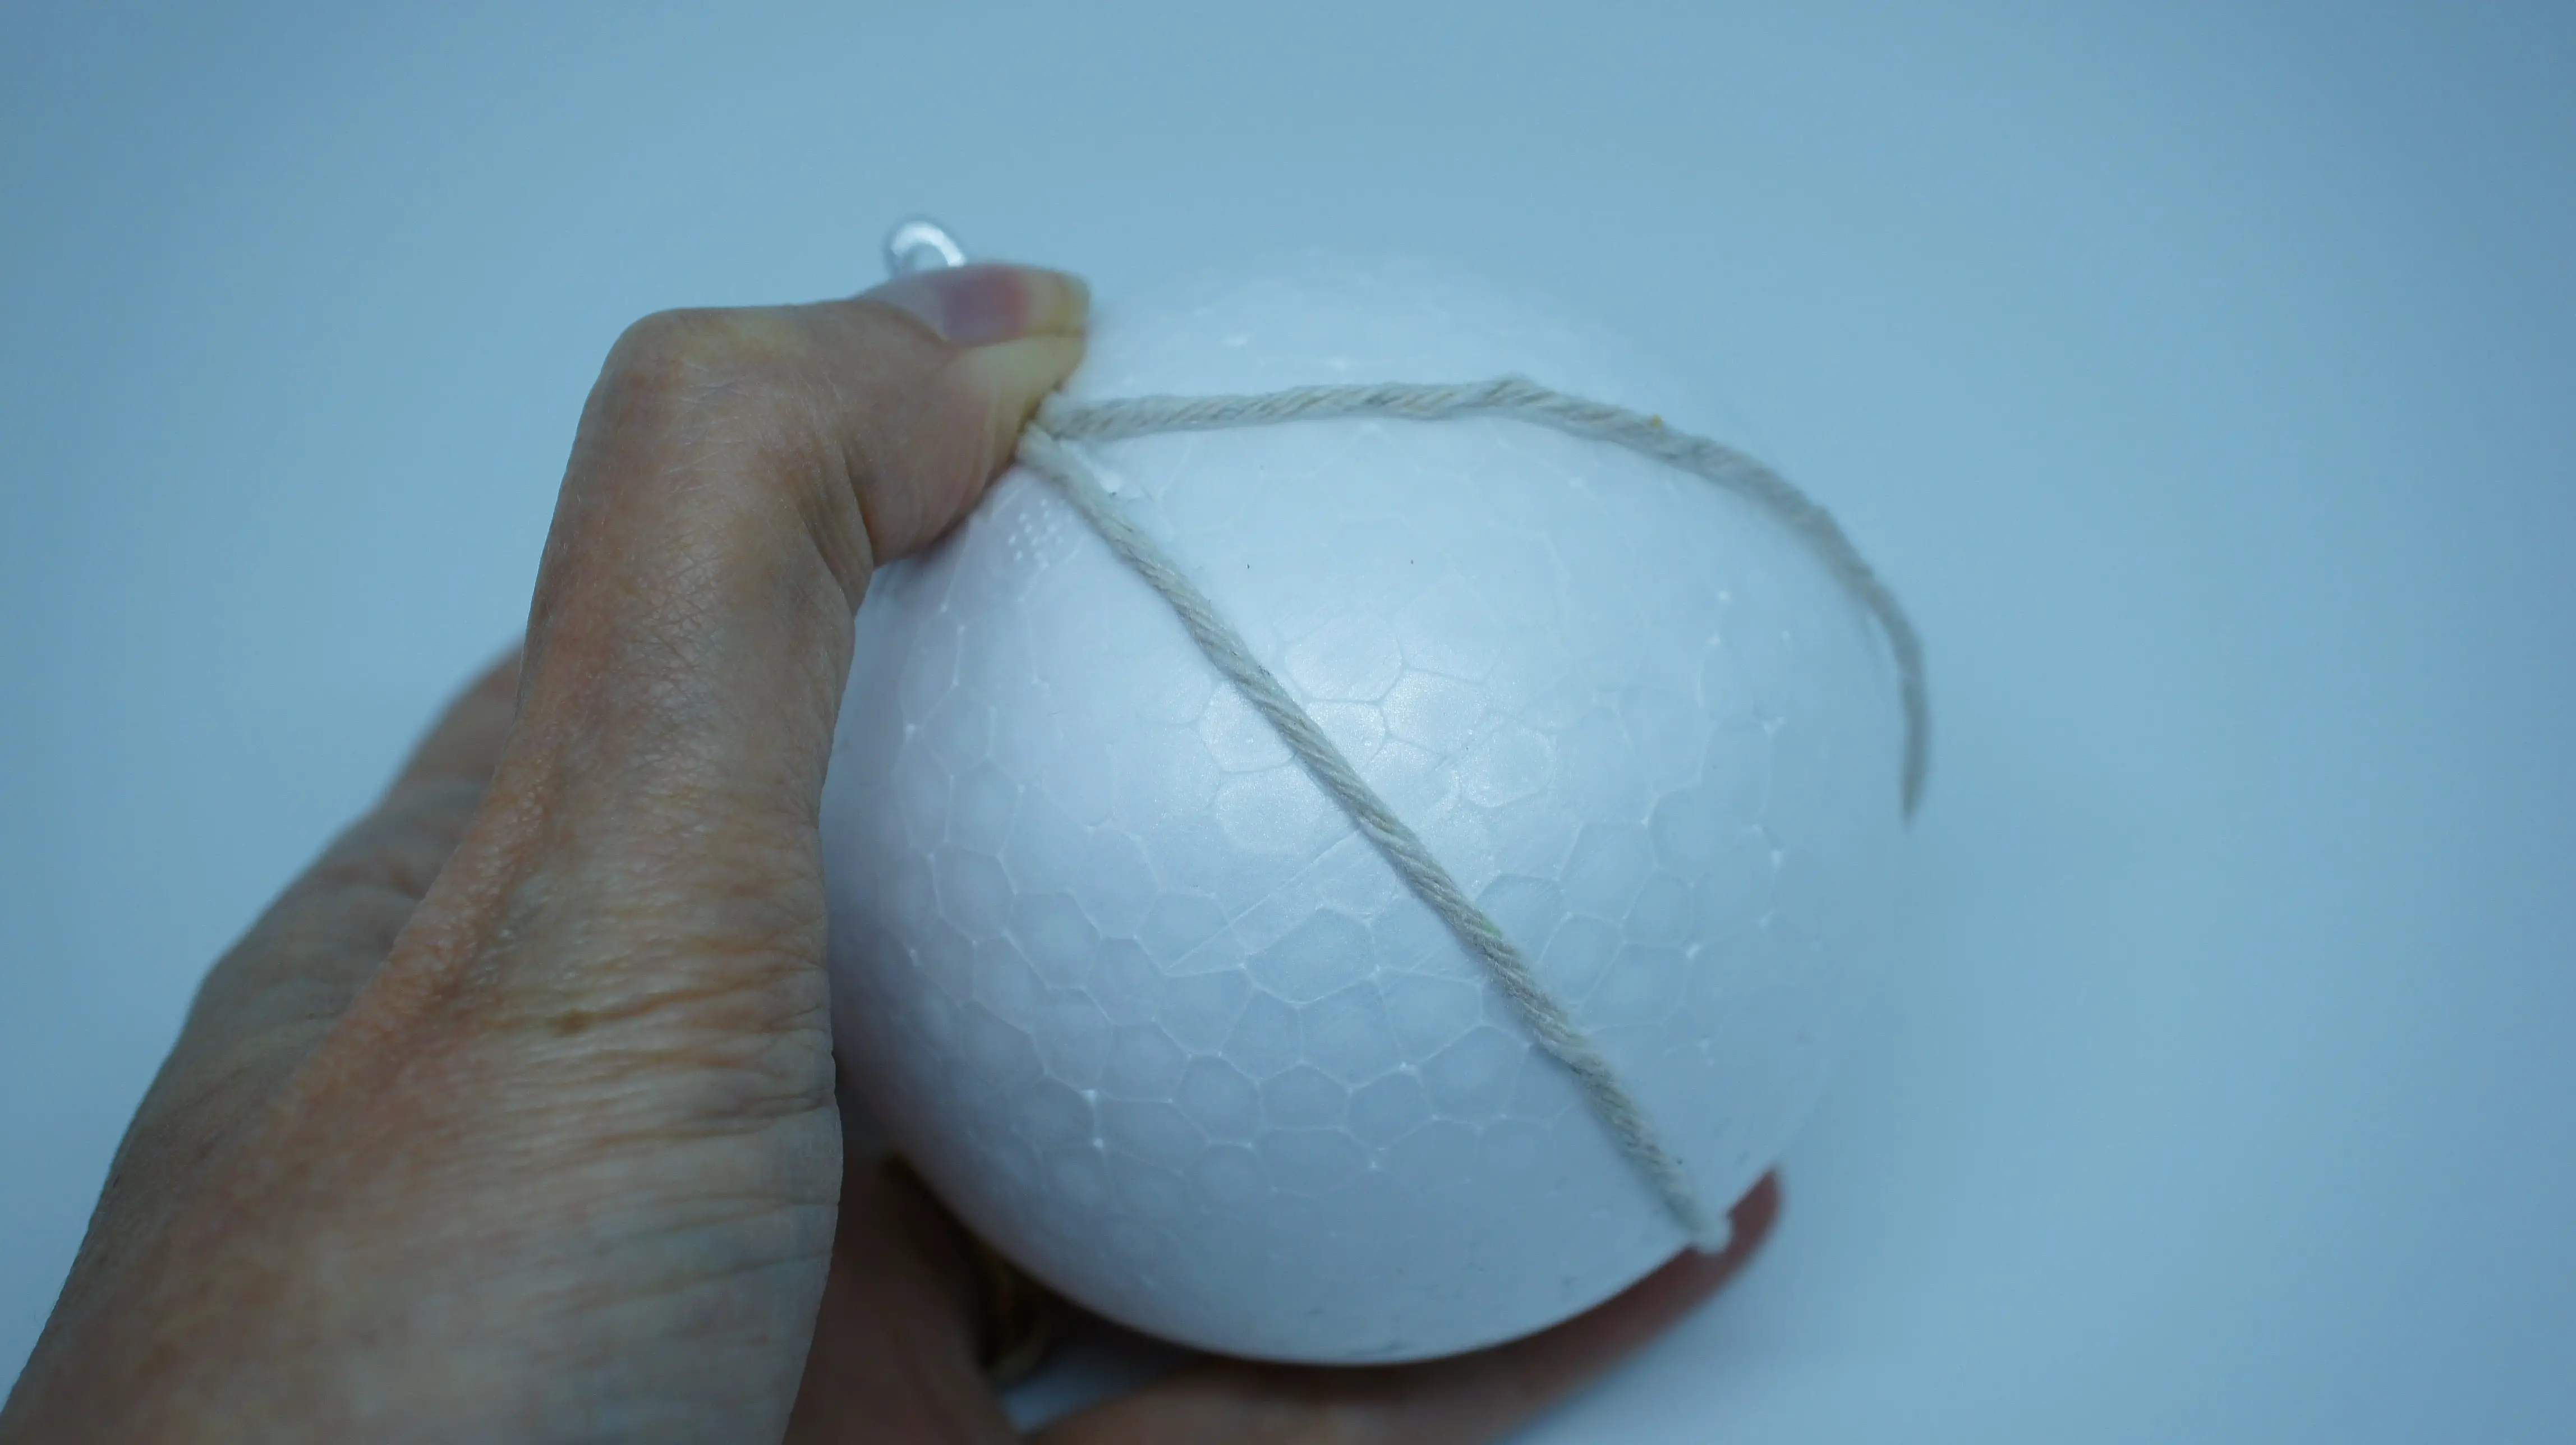 string wrapped around styrofoam ball